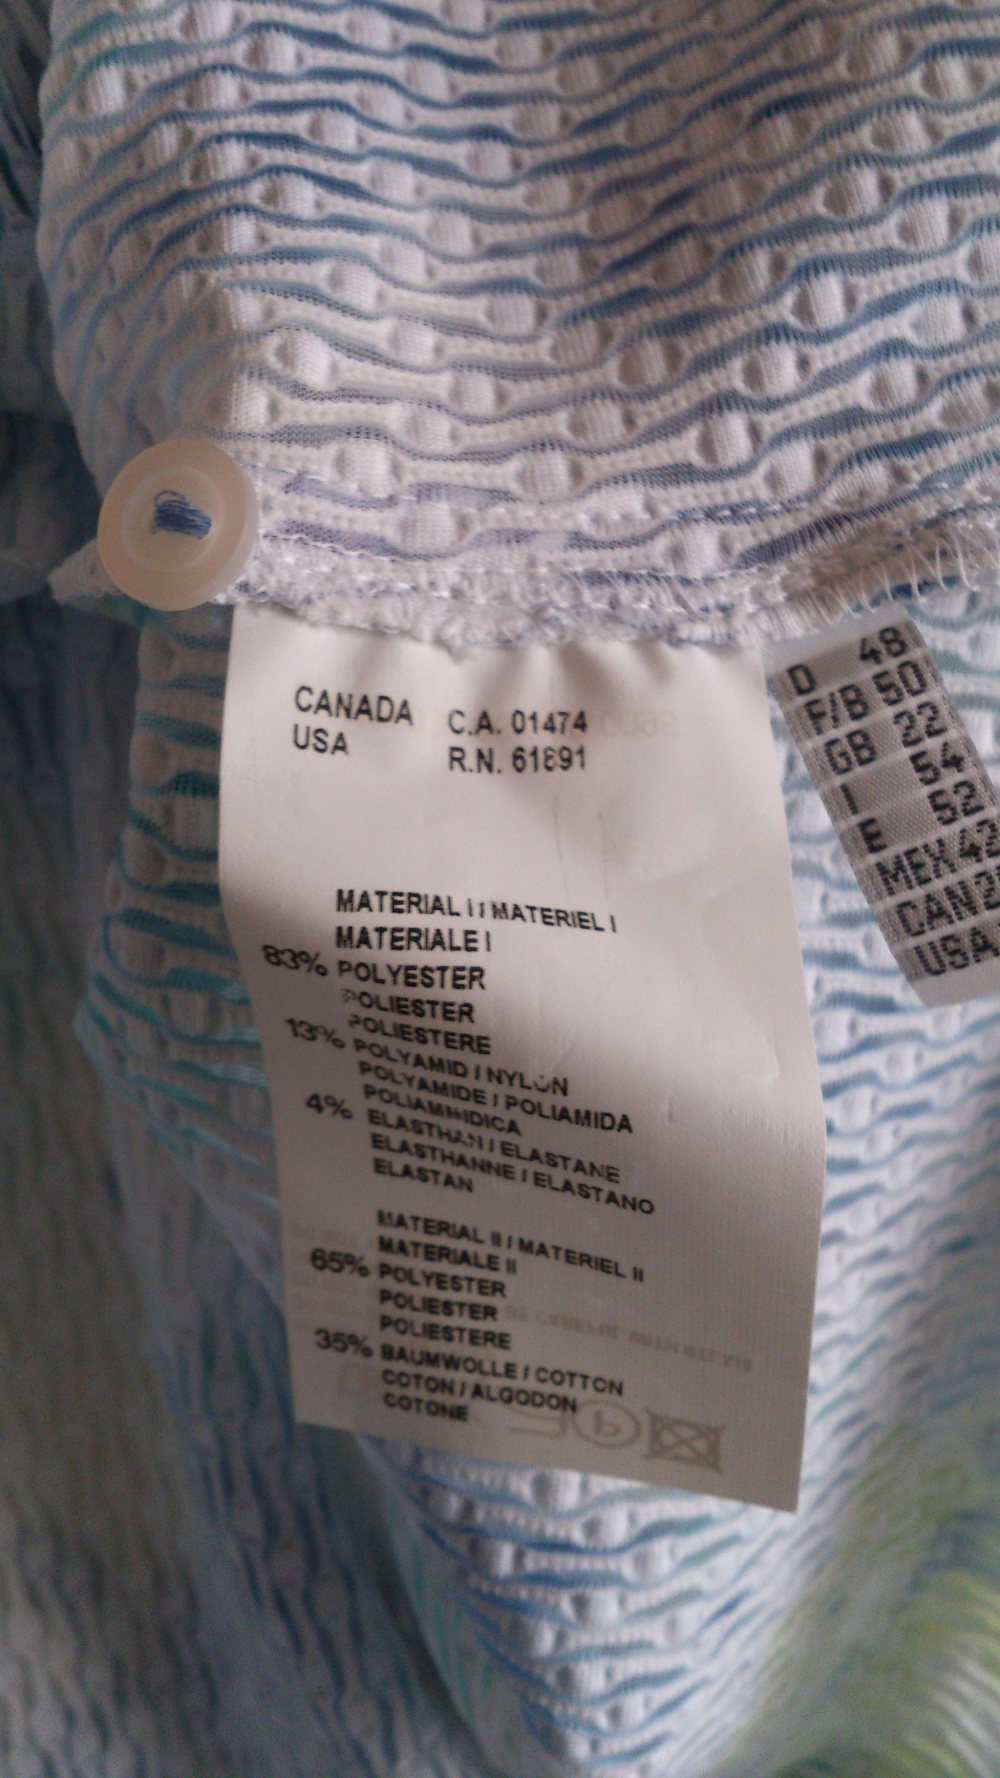 Блузка - рубашка Cavita, размер 48 (нем) = 52-54 (рос)